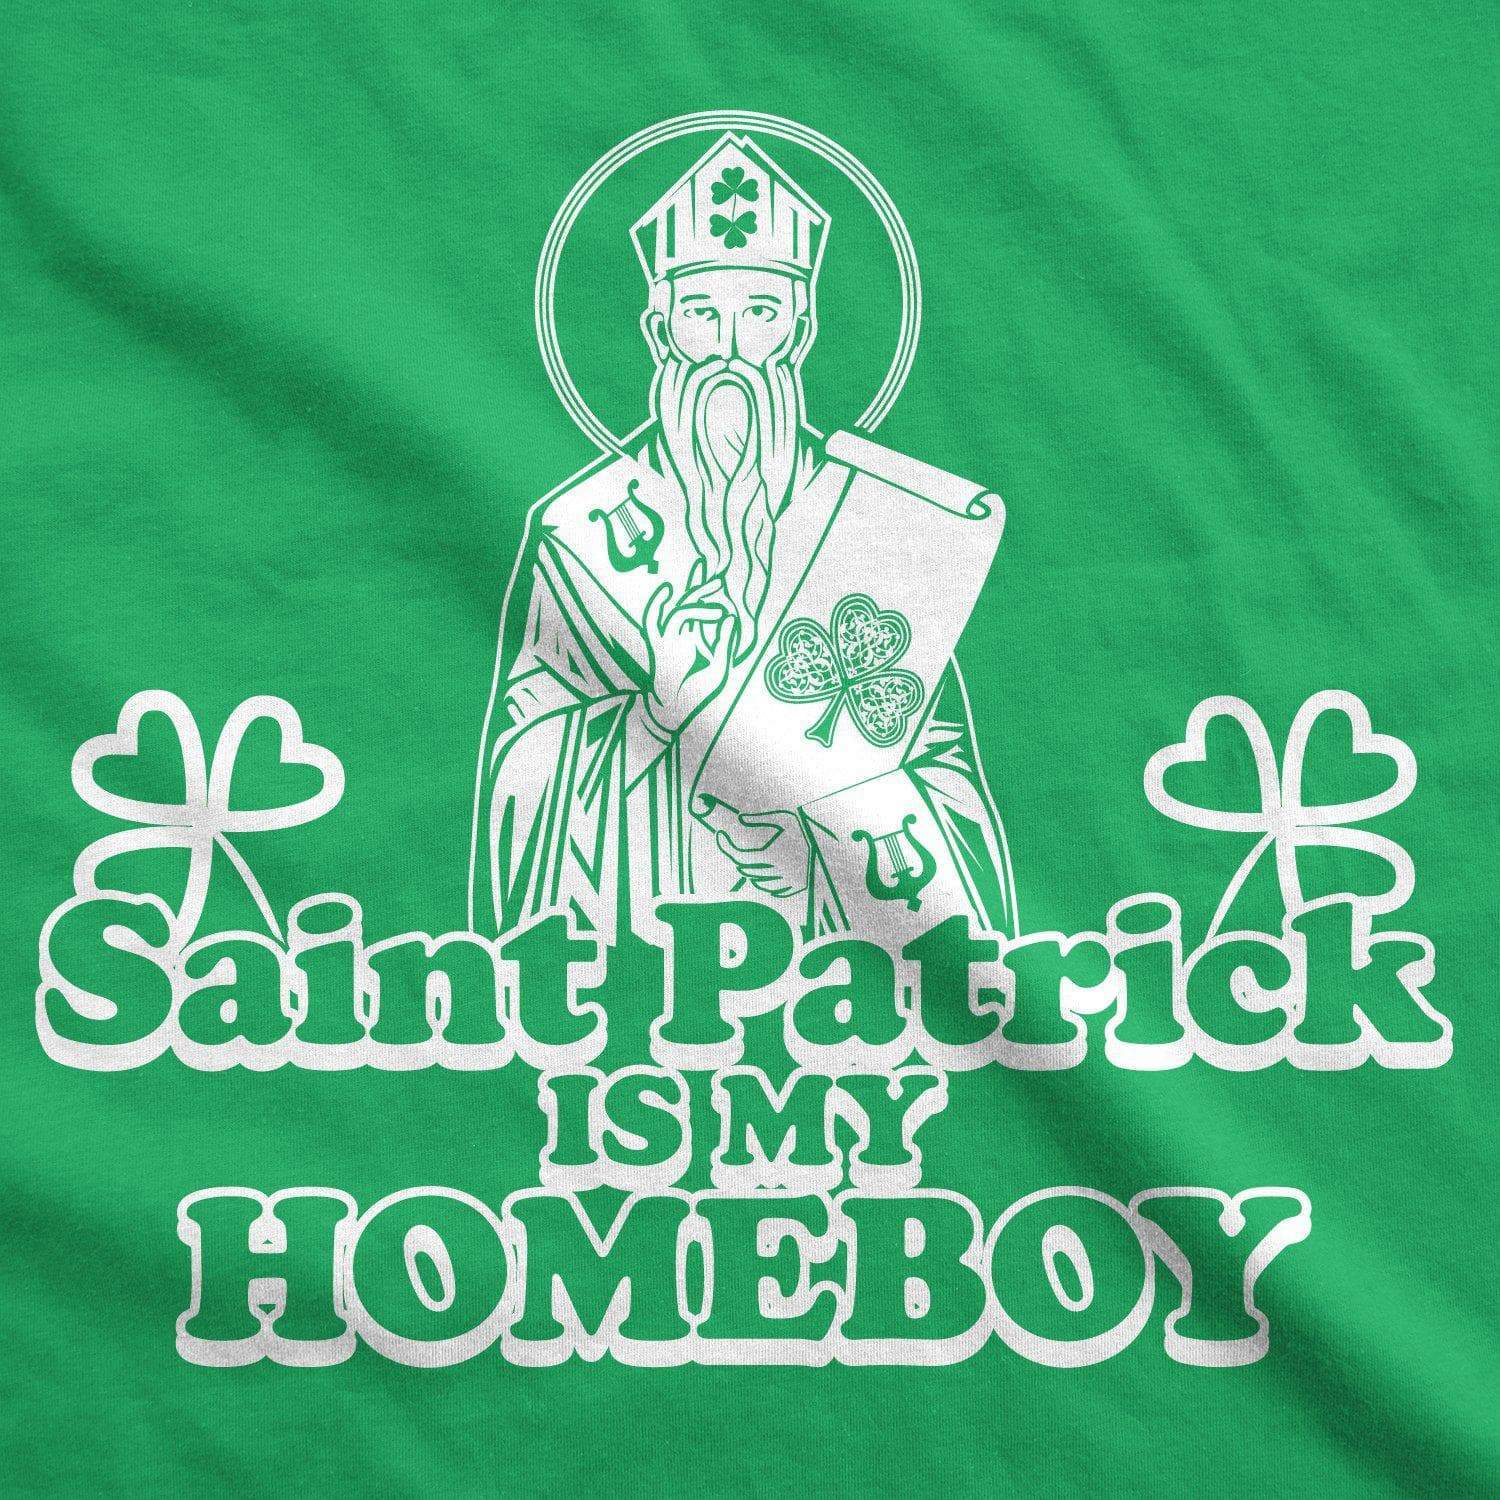 St. Patrick Is My Homeboy Women's Tshirt  -  Crazy Dog T-Shirts